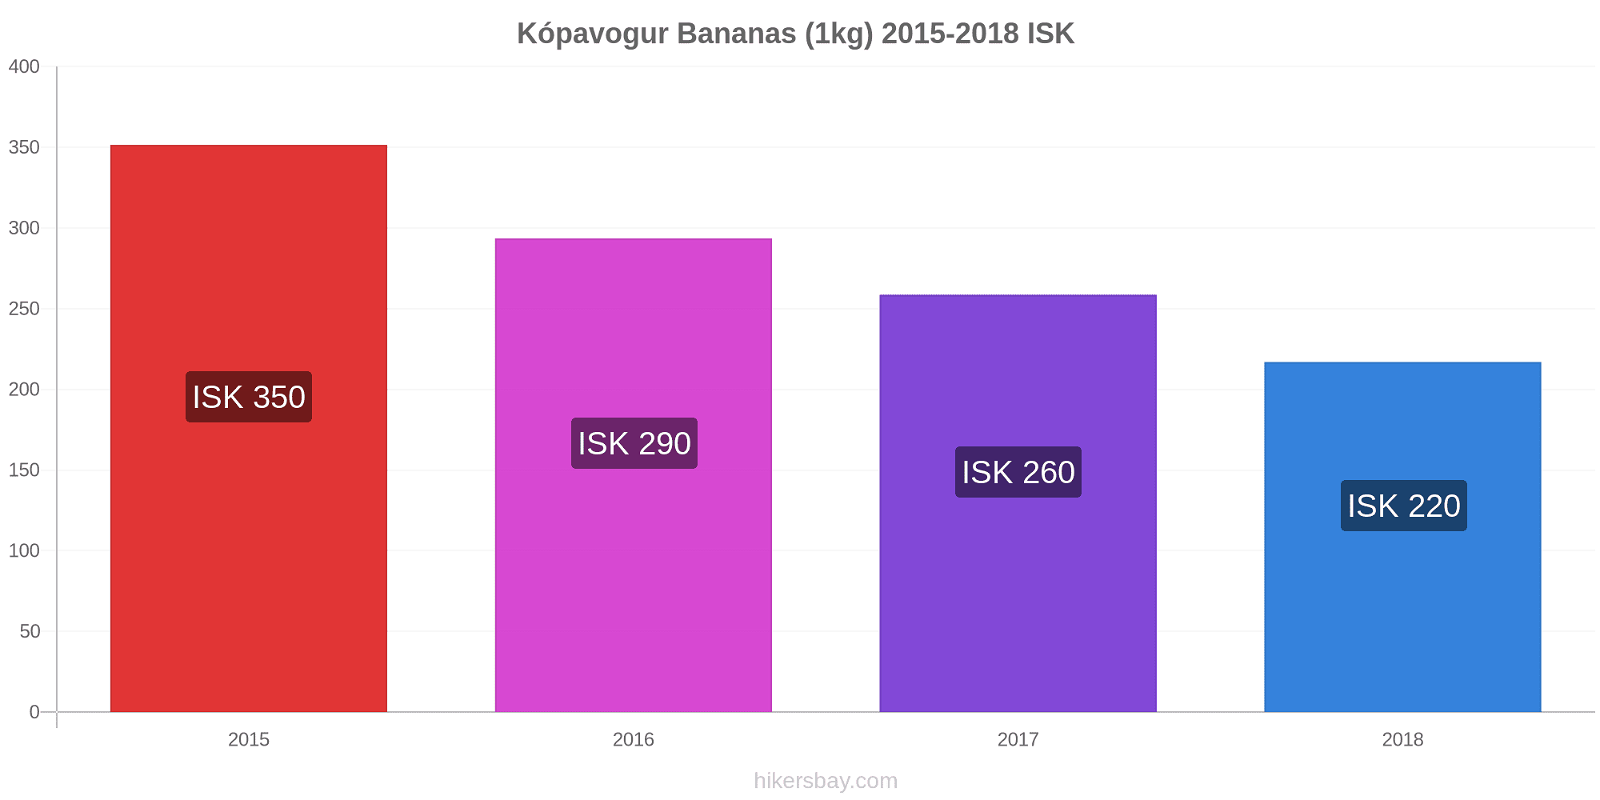 Kópavogur price changes Bananas (1kg) hikersbay.com